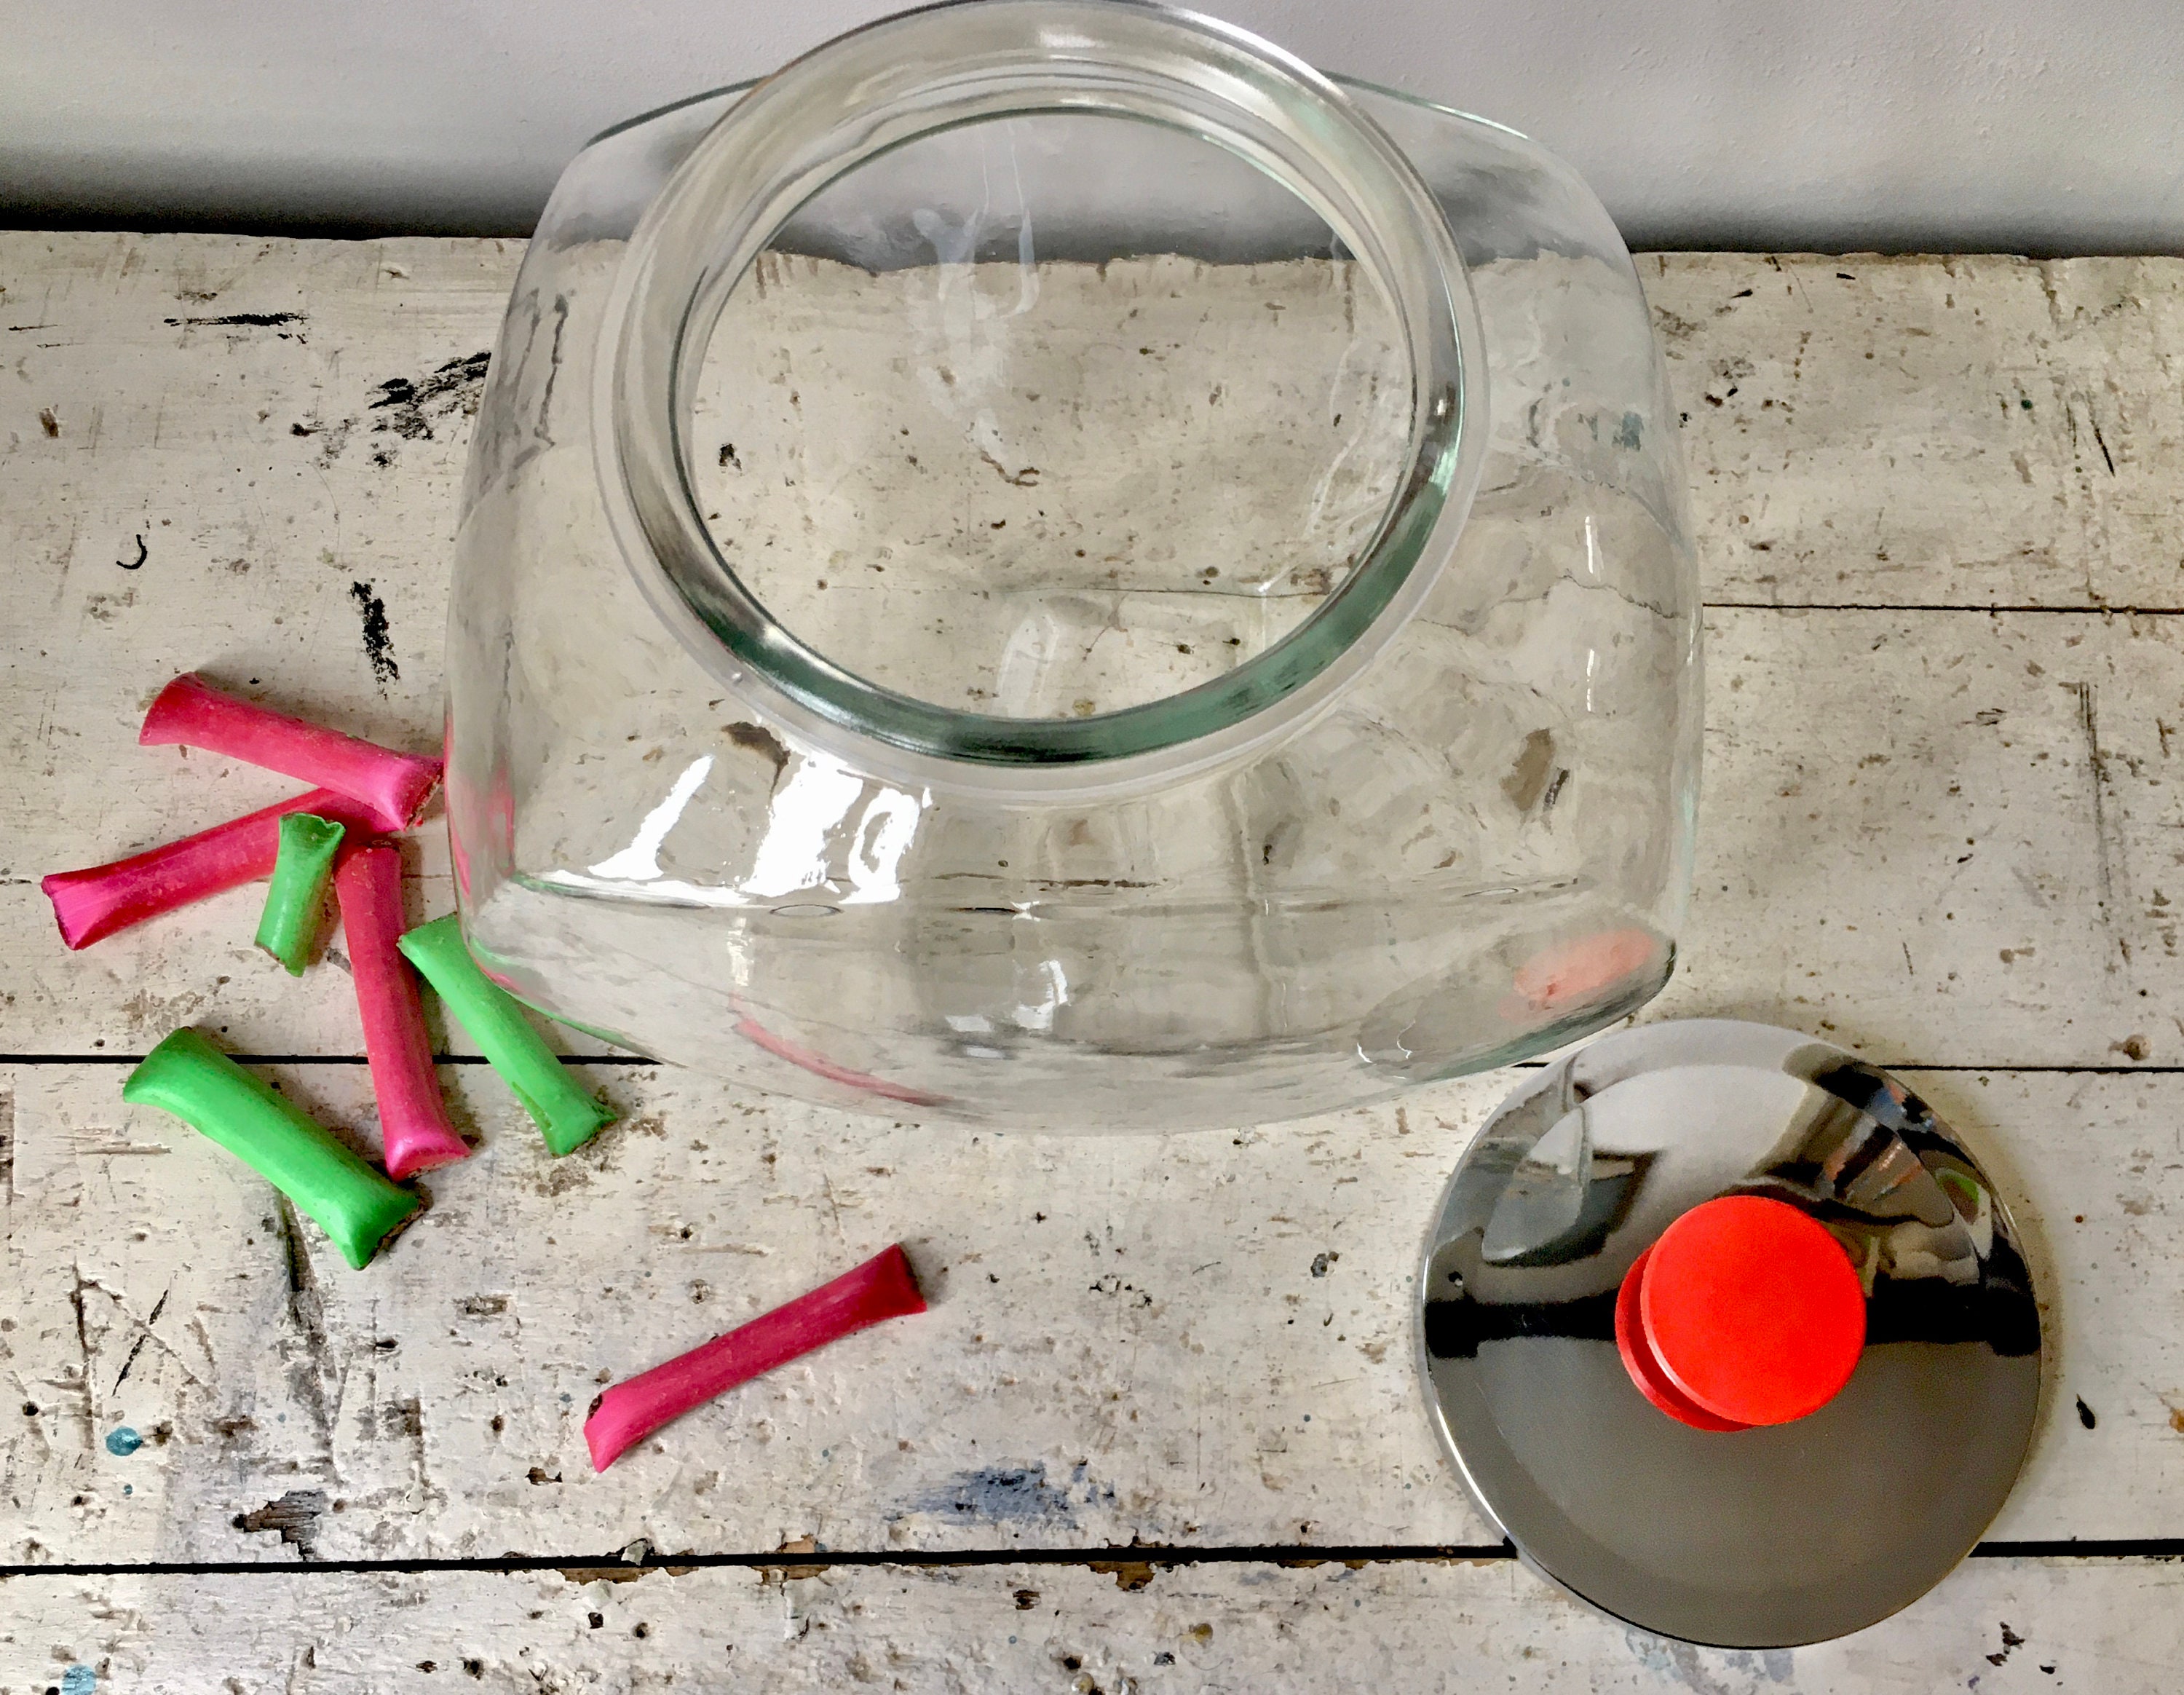 HyperSpace Large Glass Penny Jar, Candy Jar, Cookie Jar, Storage Jar,  Chrome Lids, Set of 2, Size 73 oz (9 cups)